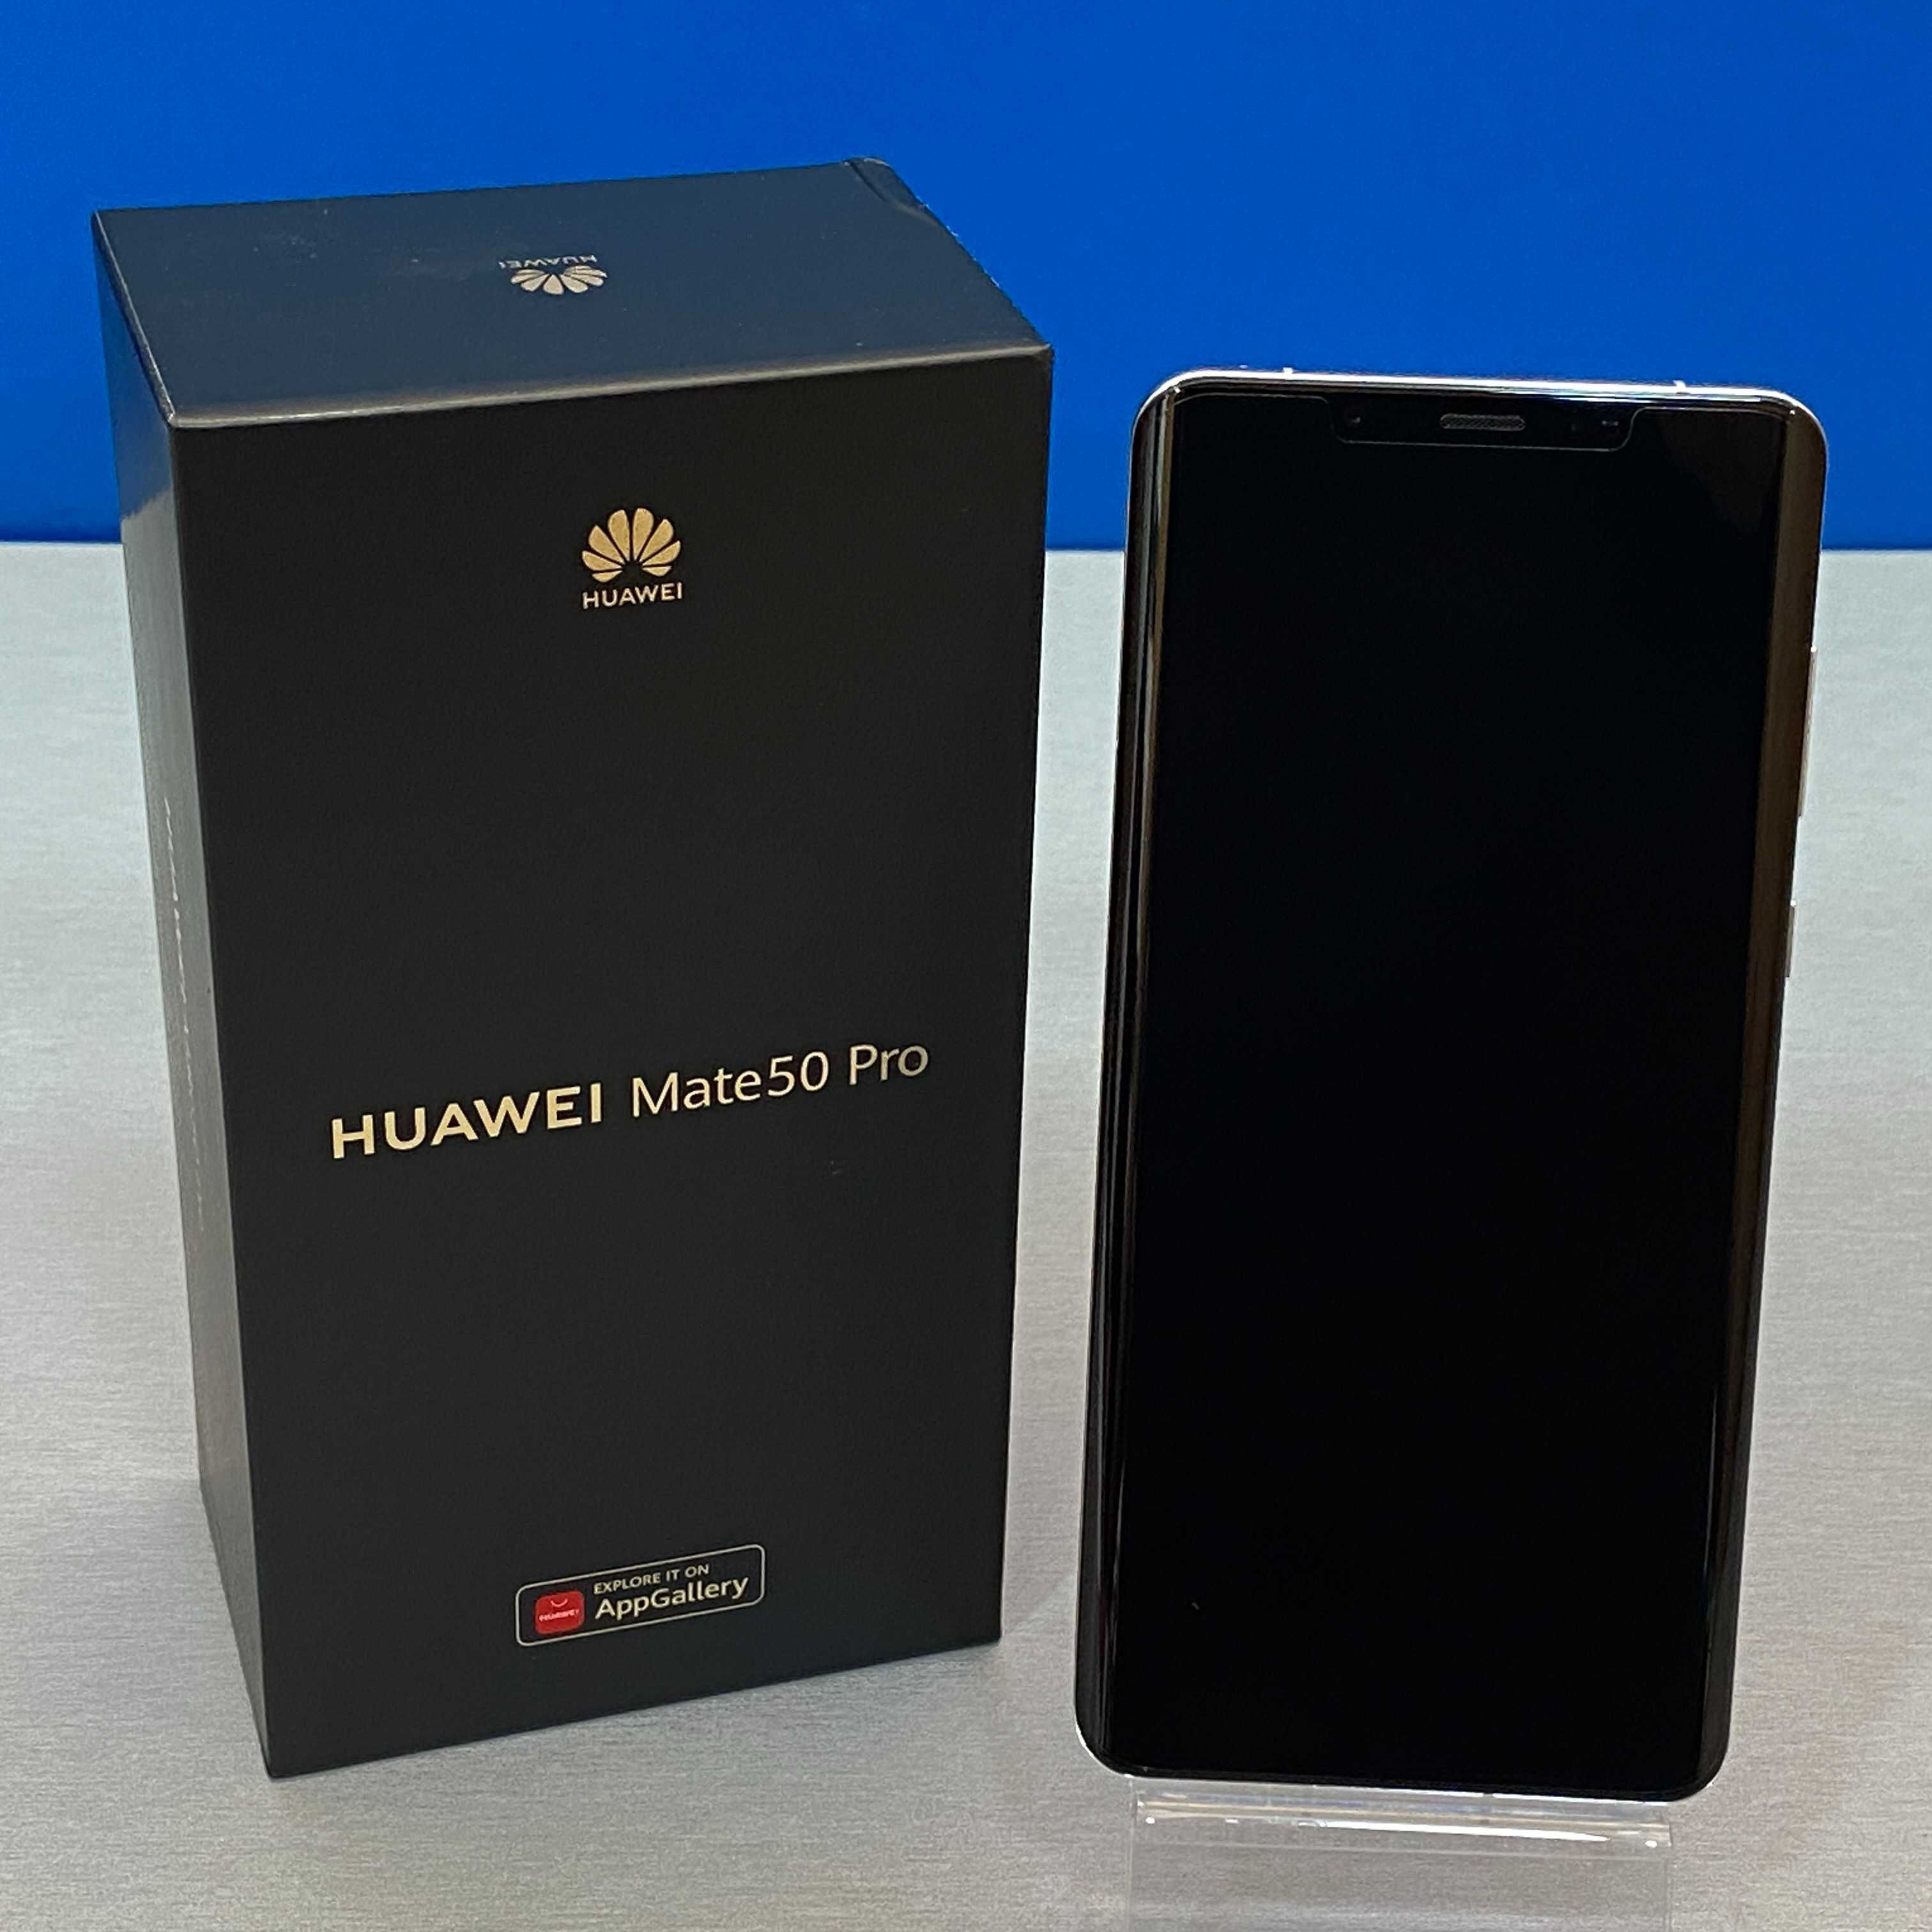 Huawei Mate 50 Pro (8GB/256GB) - Silver - NOVO - 3 ANOS DE GARANTIA